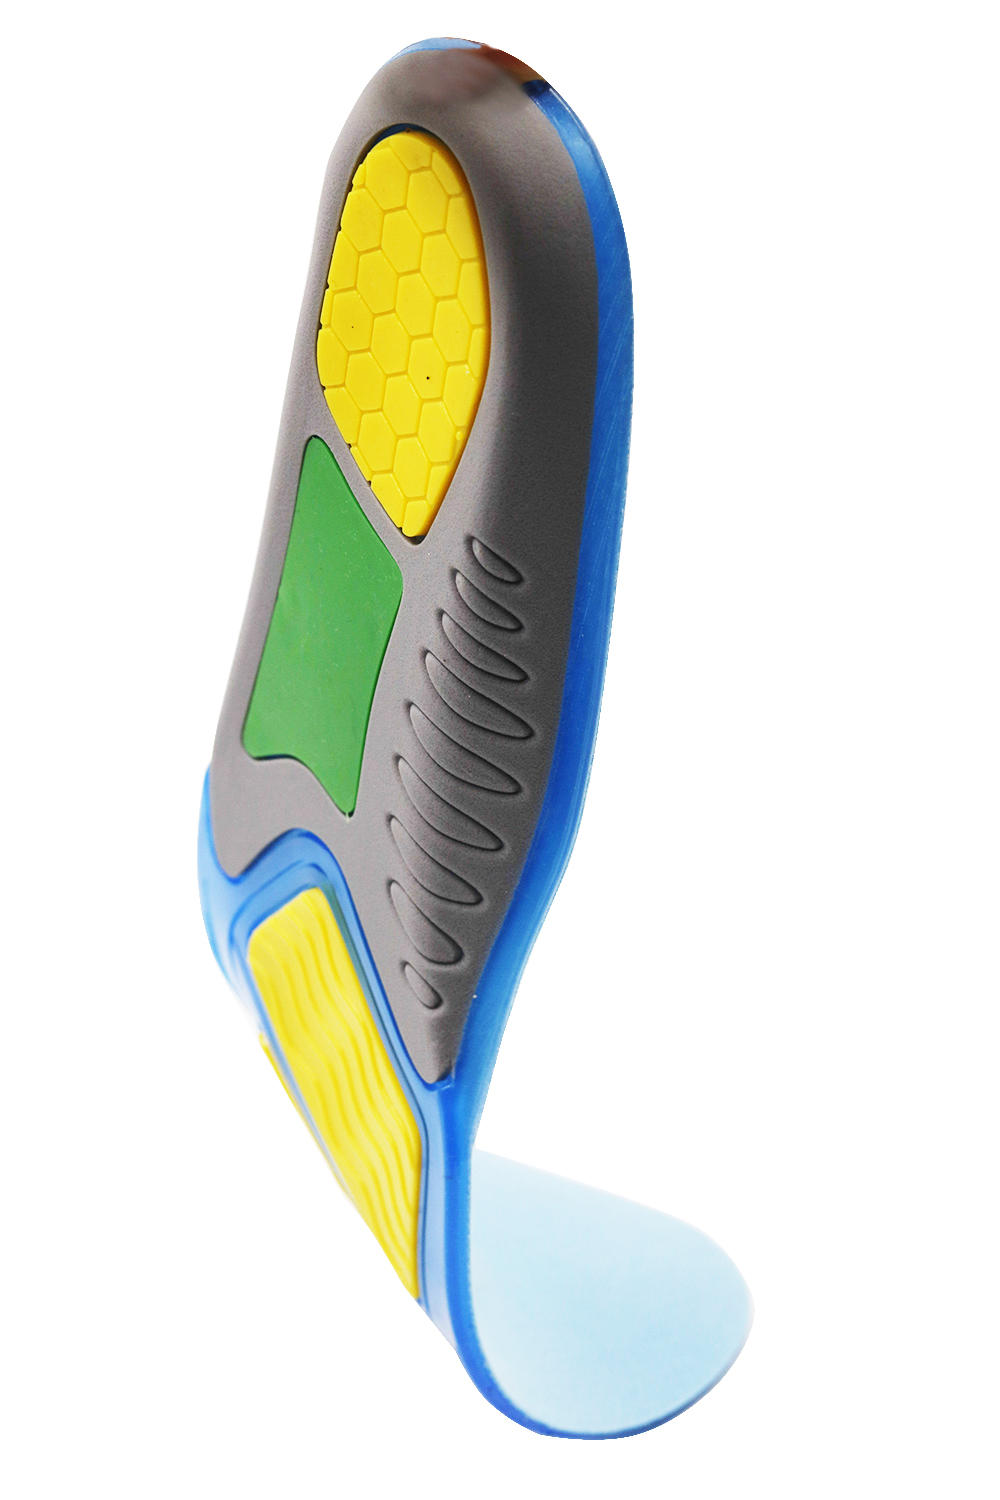 Comfort Gel Insoles for Shock Absorption Heel Protection Relieve Foot Pain for Men & Women